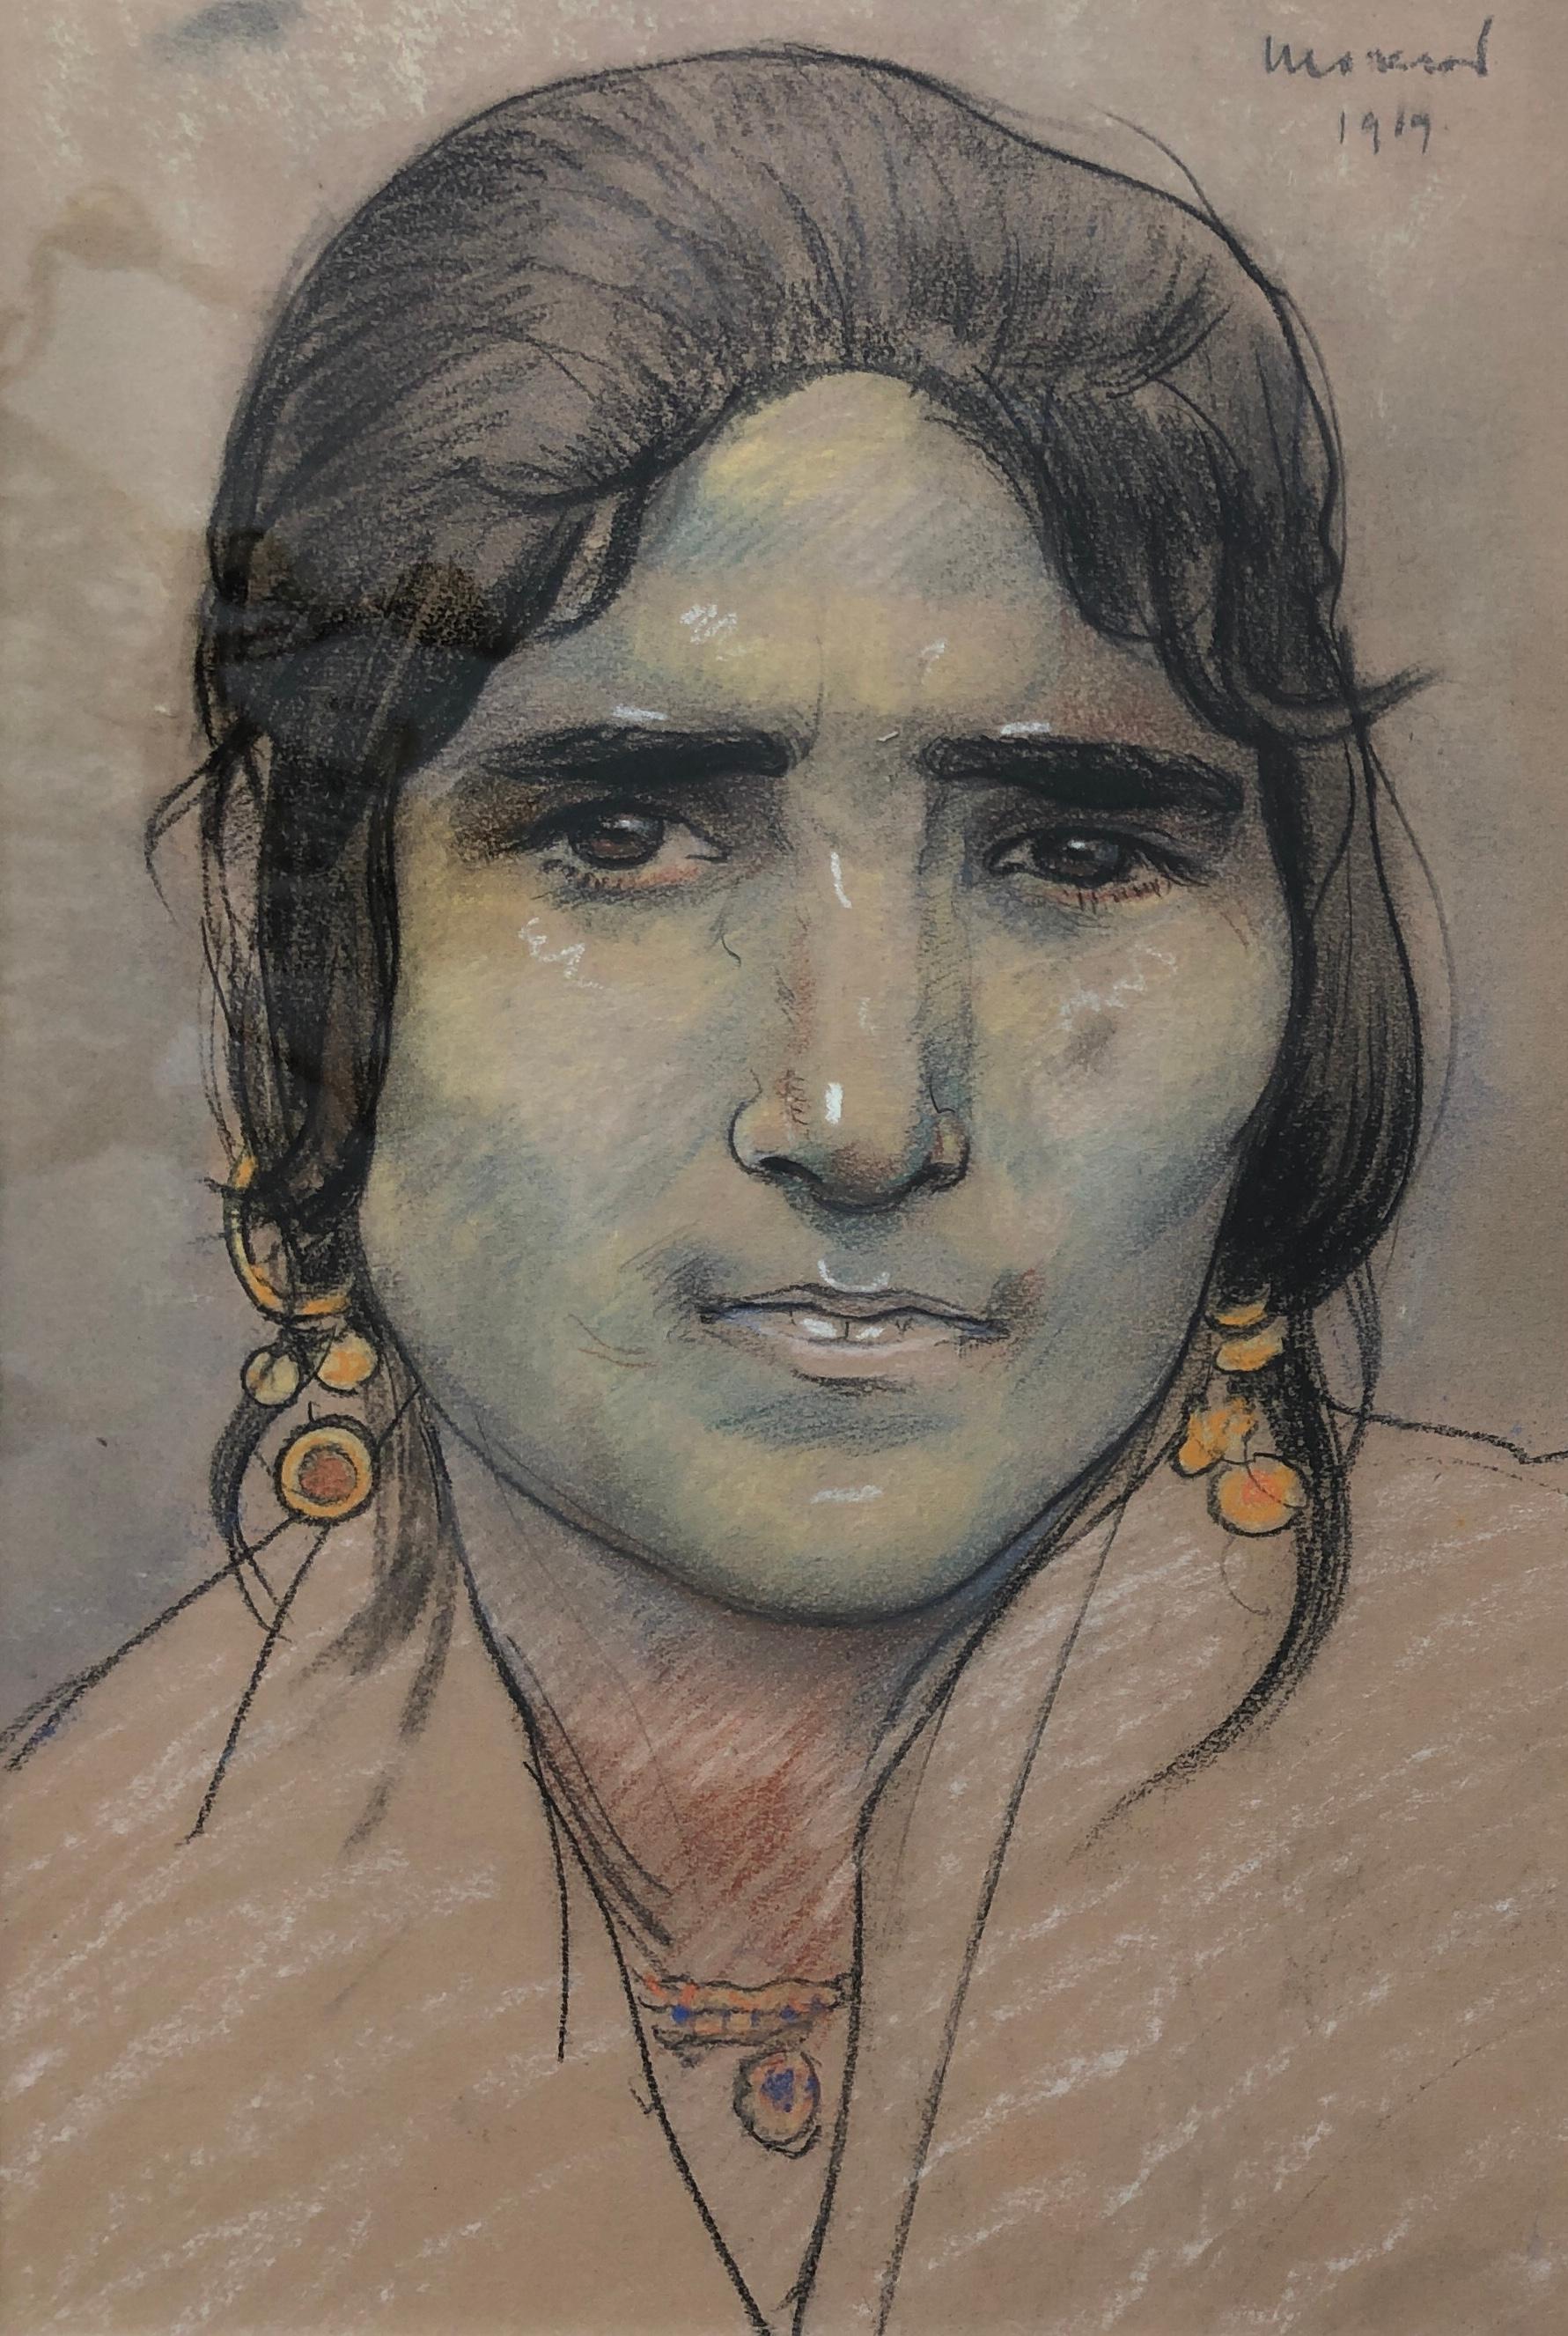 Native American woman portrait